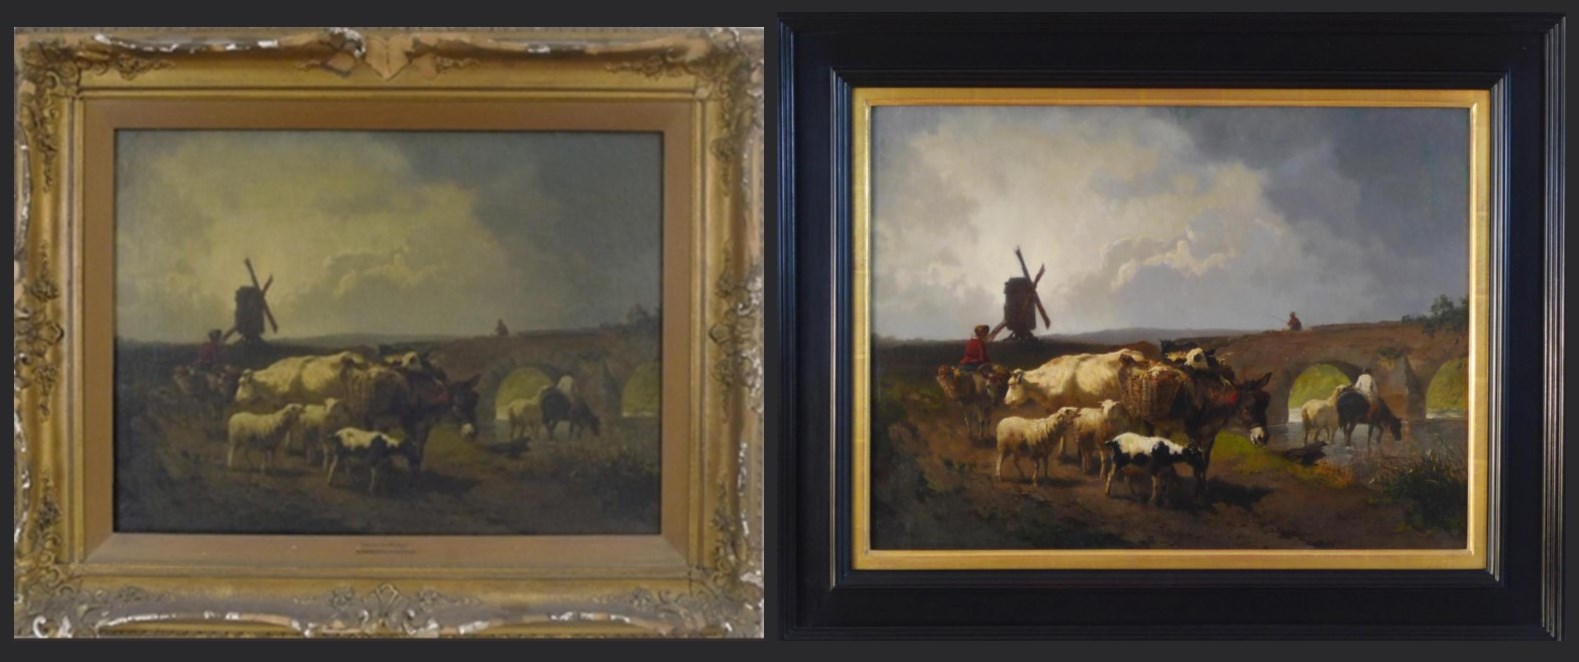 Dutch painting framed